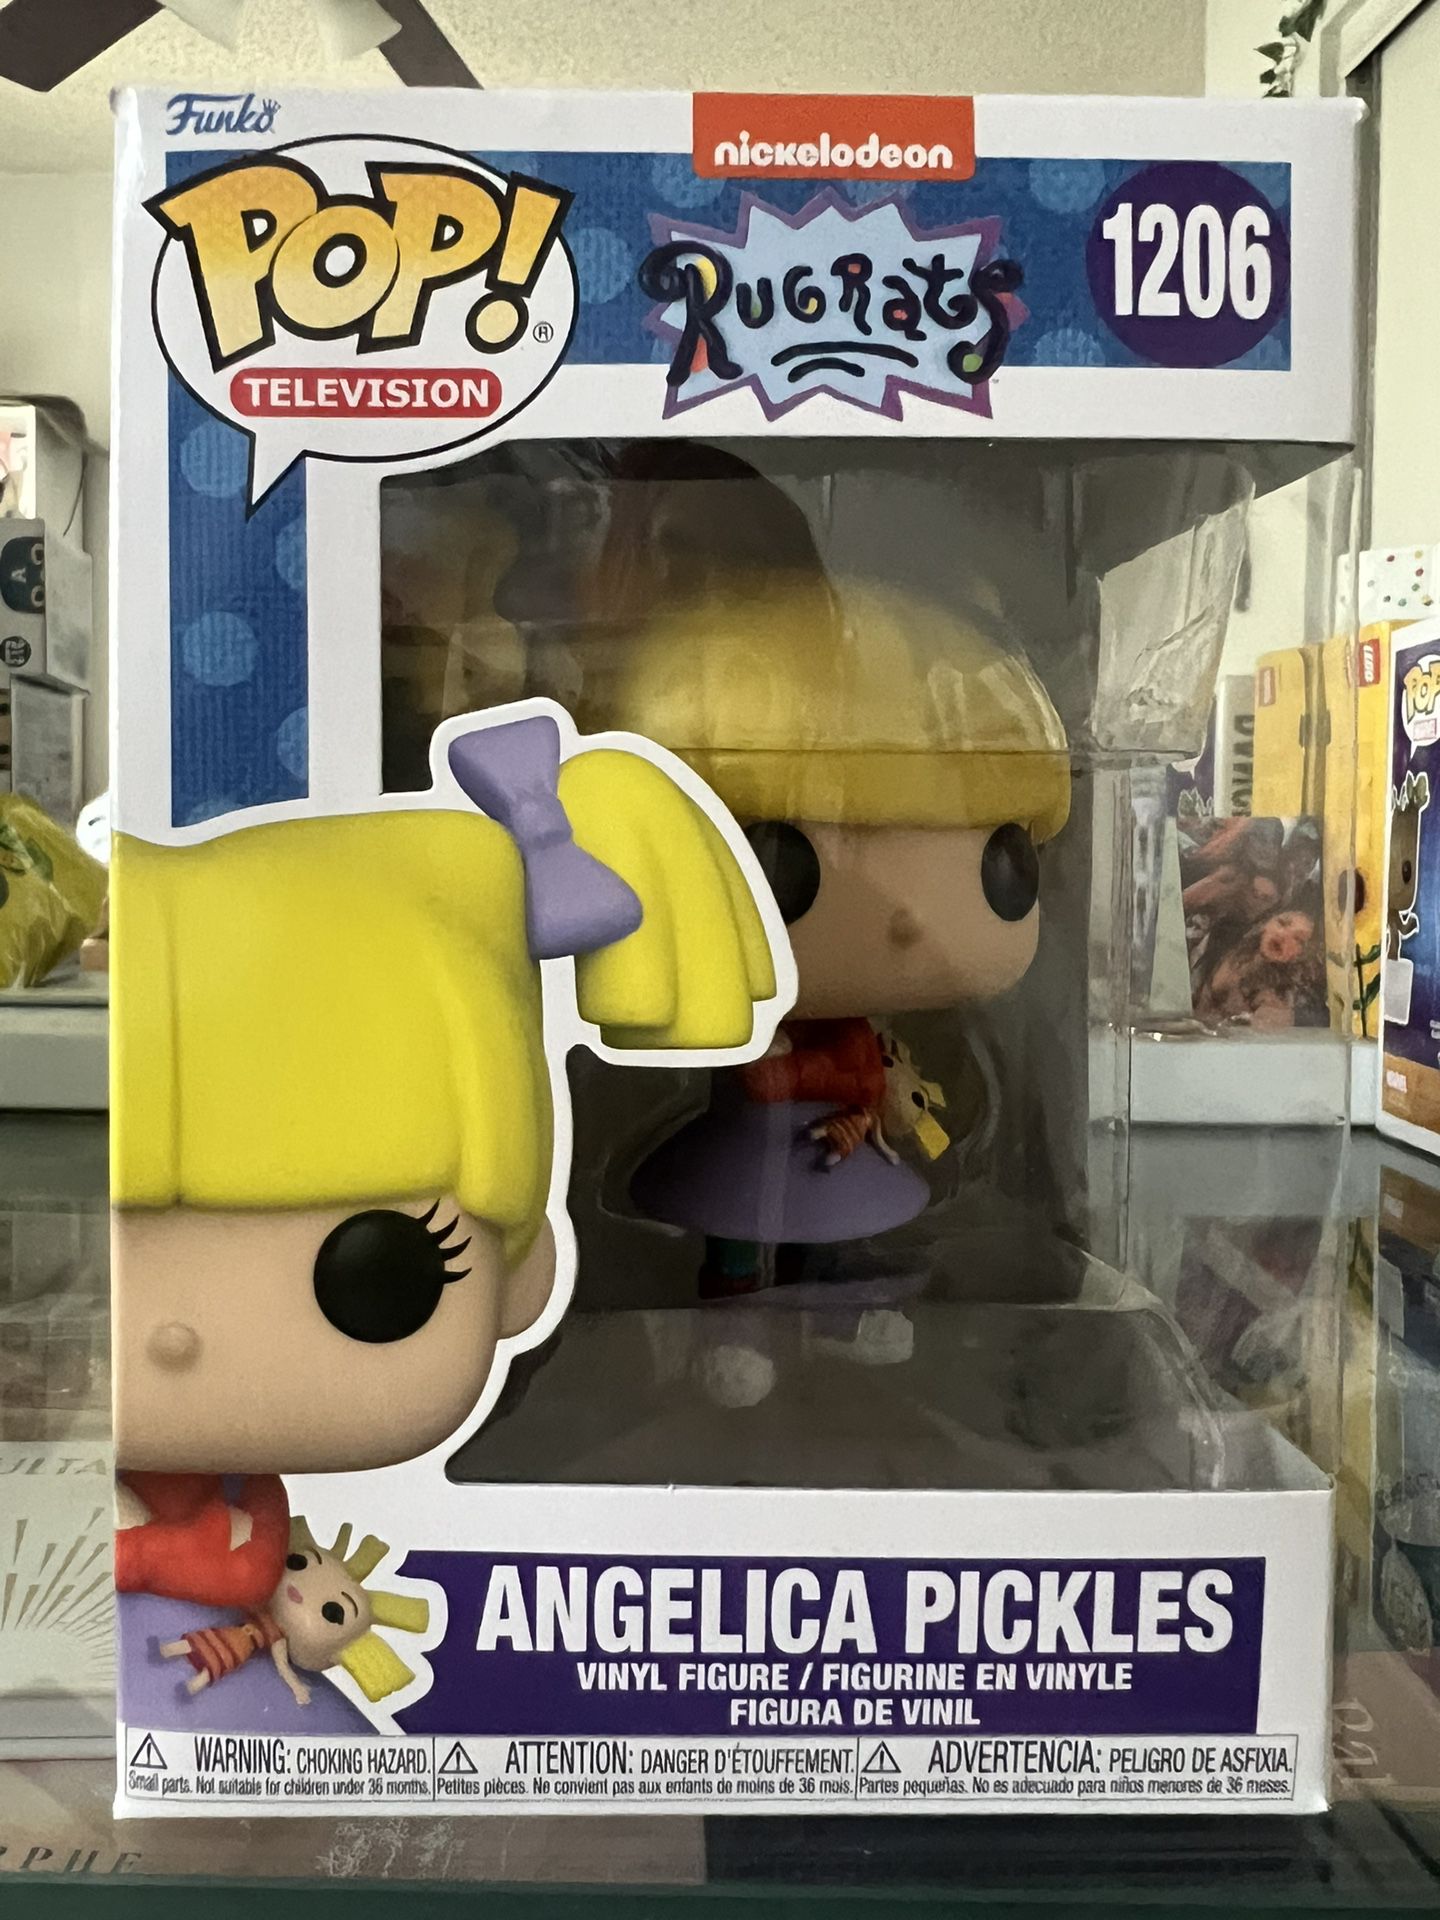 Rugrats Angelica Pickles Pop Funko